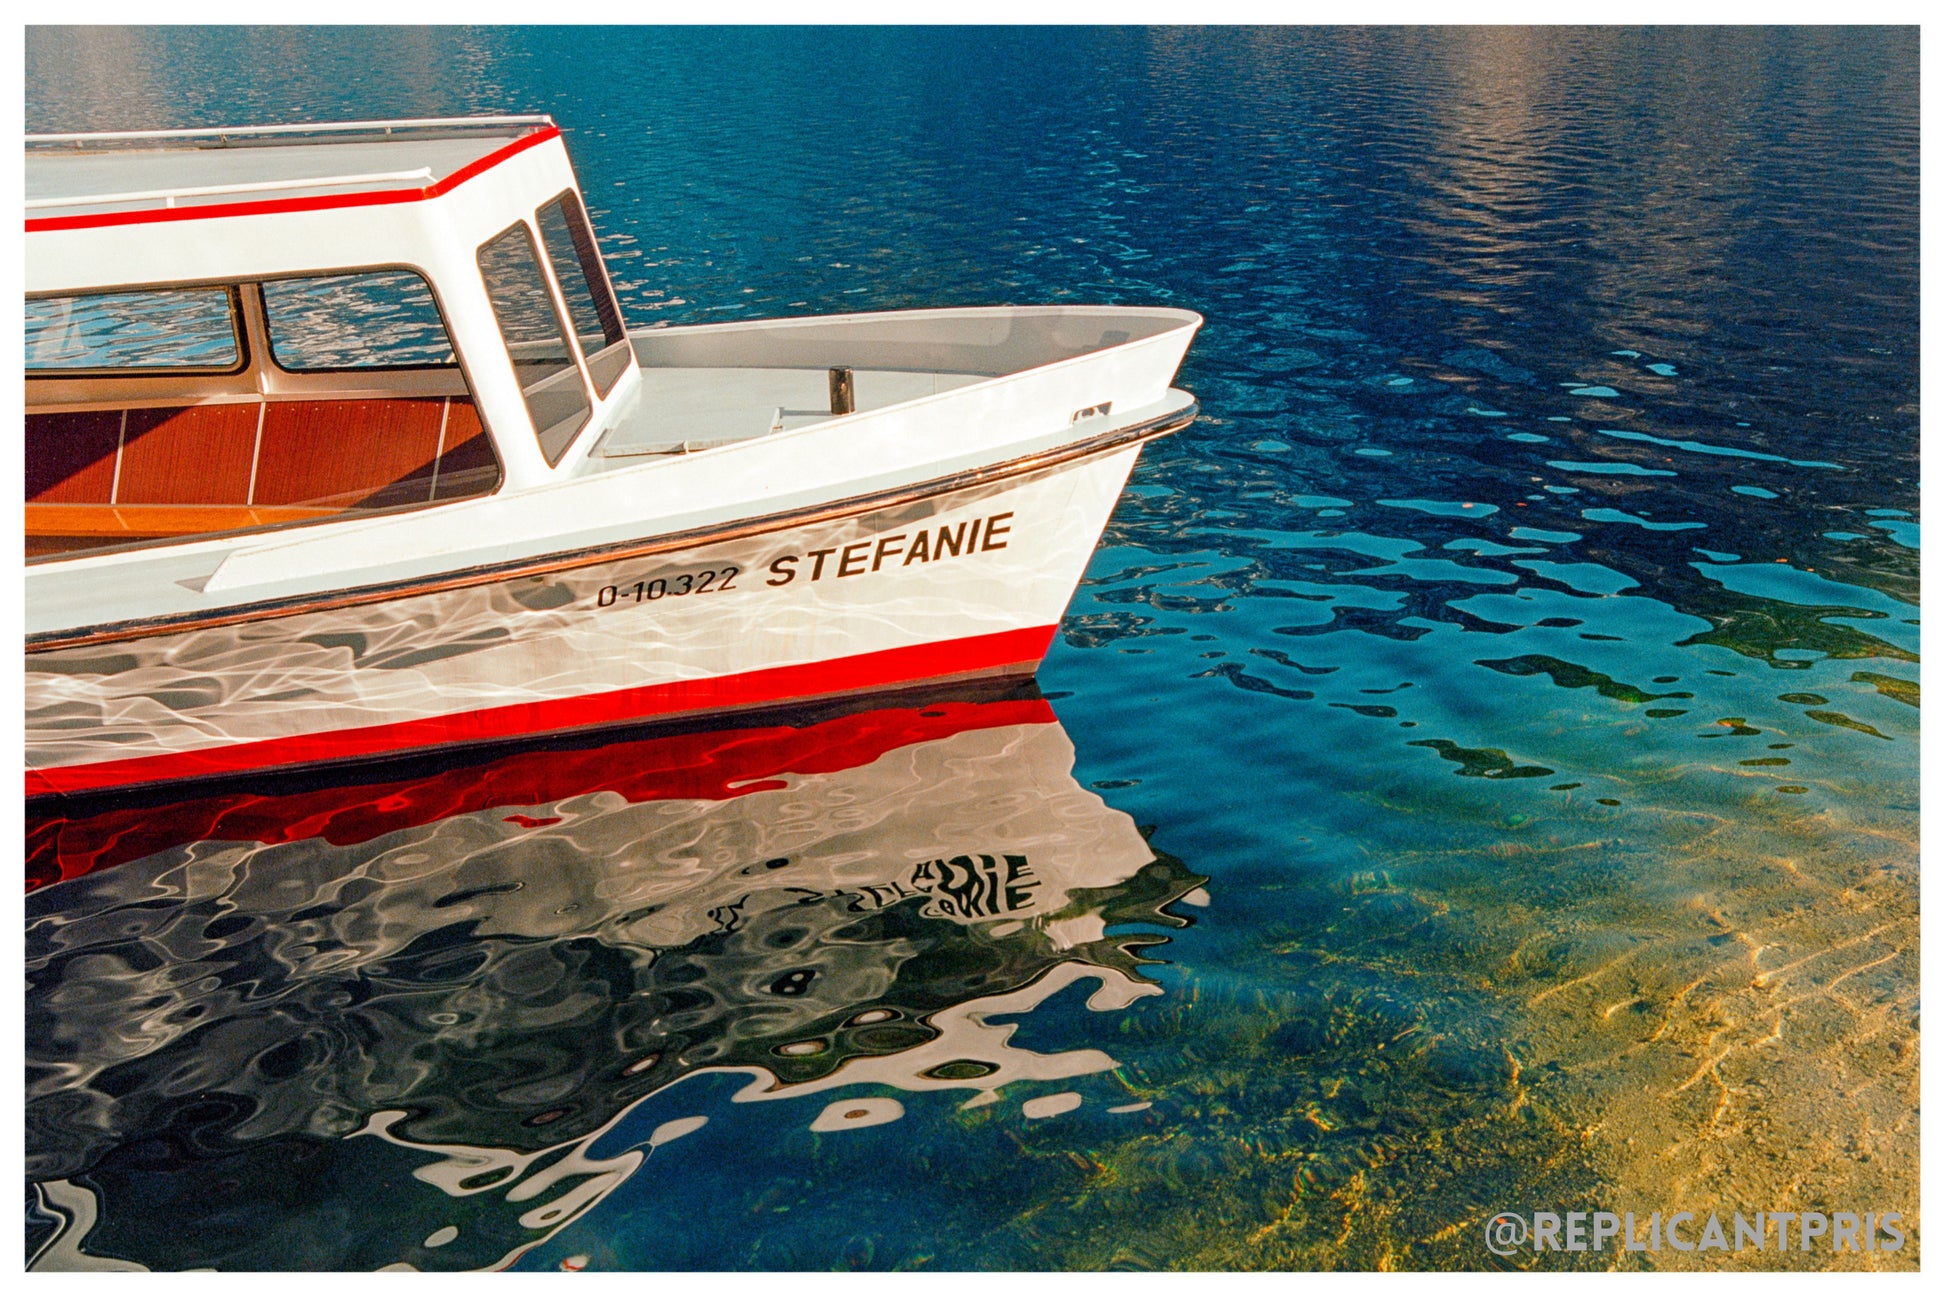 Ektar 100 boat photo by replicantpris